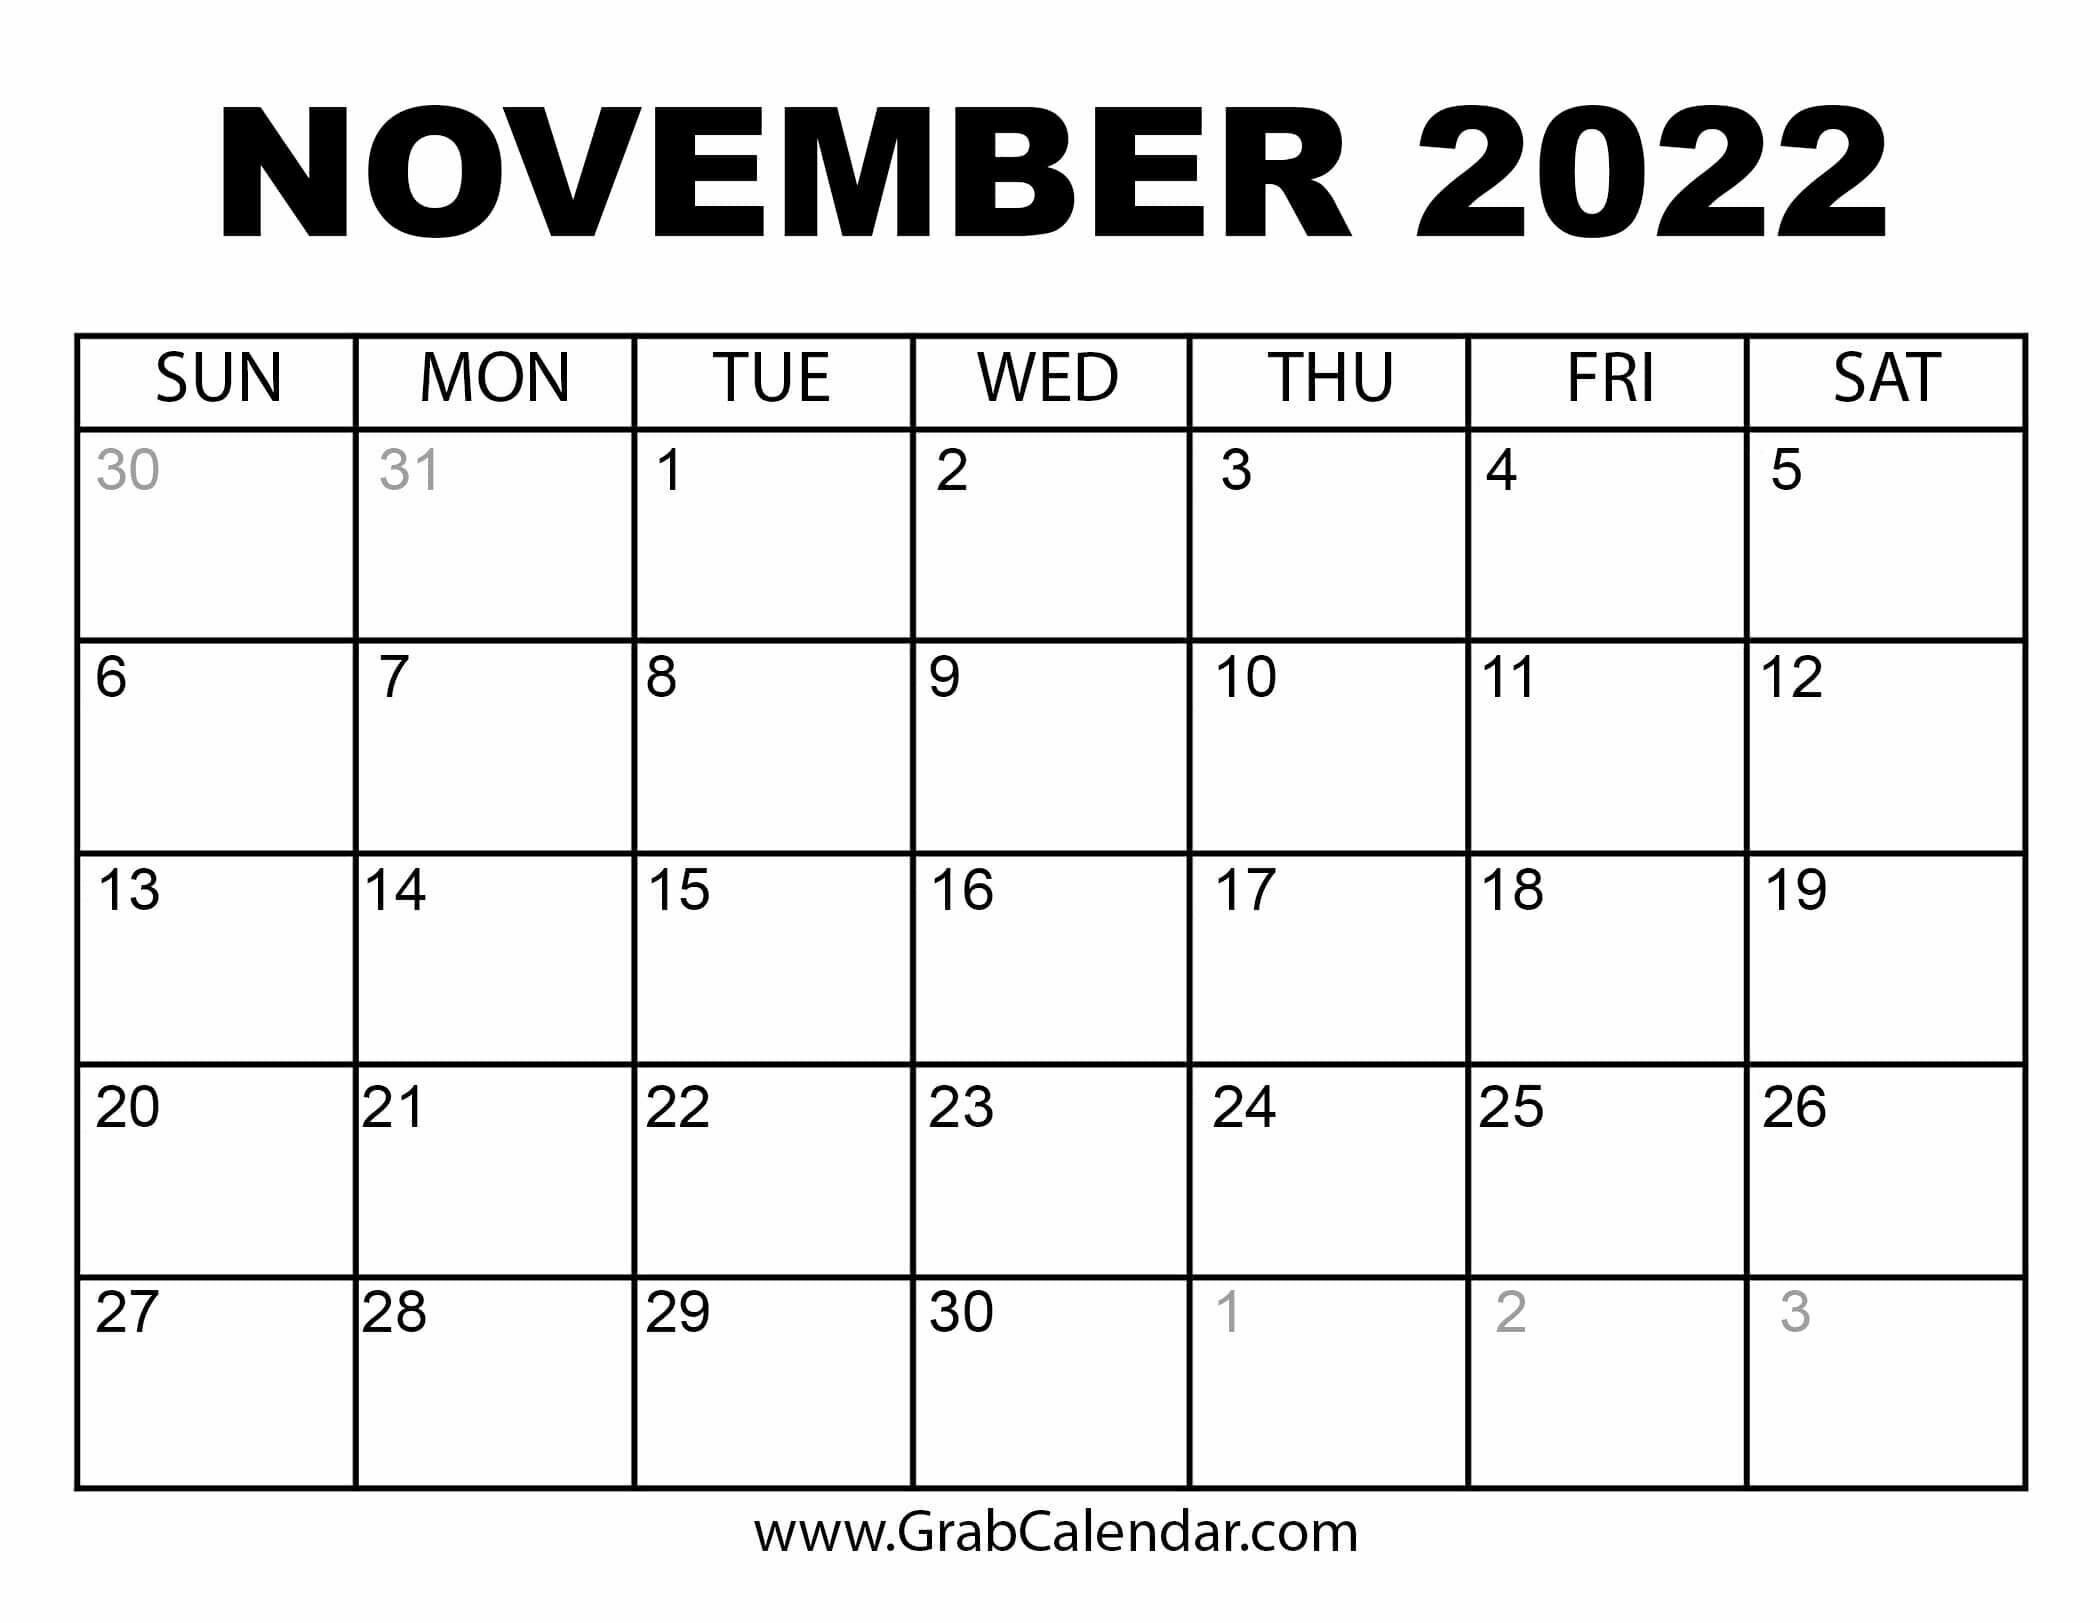 Avatar: November 2022 Calendar